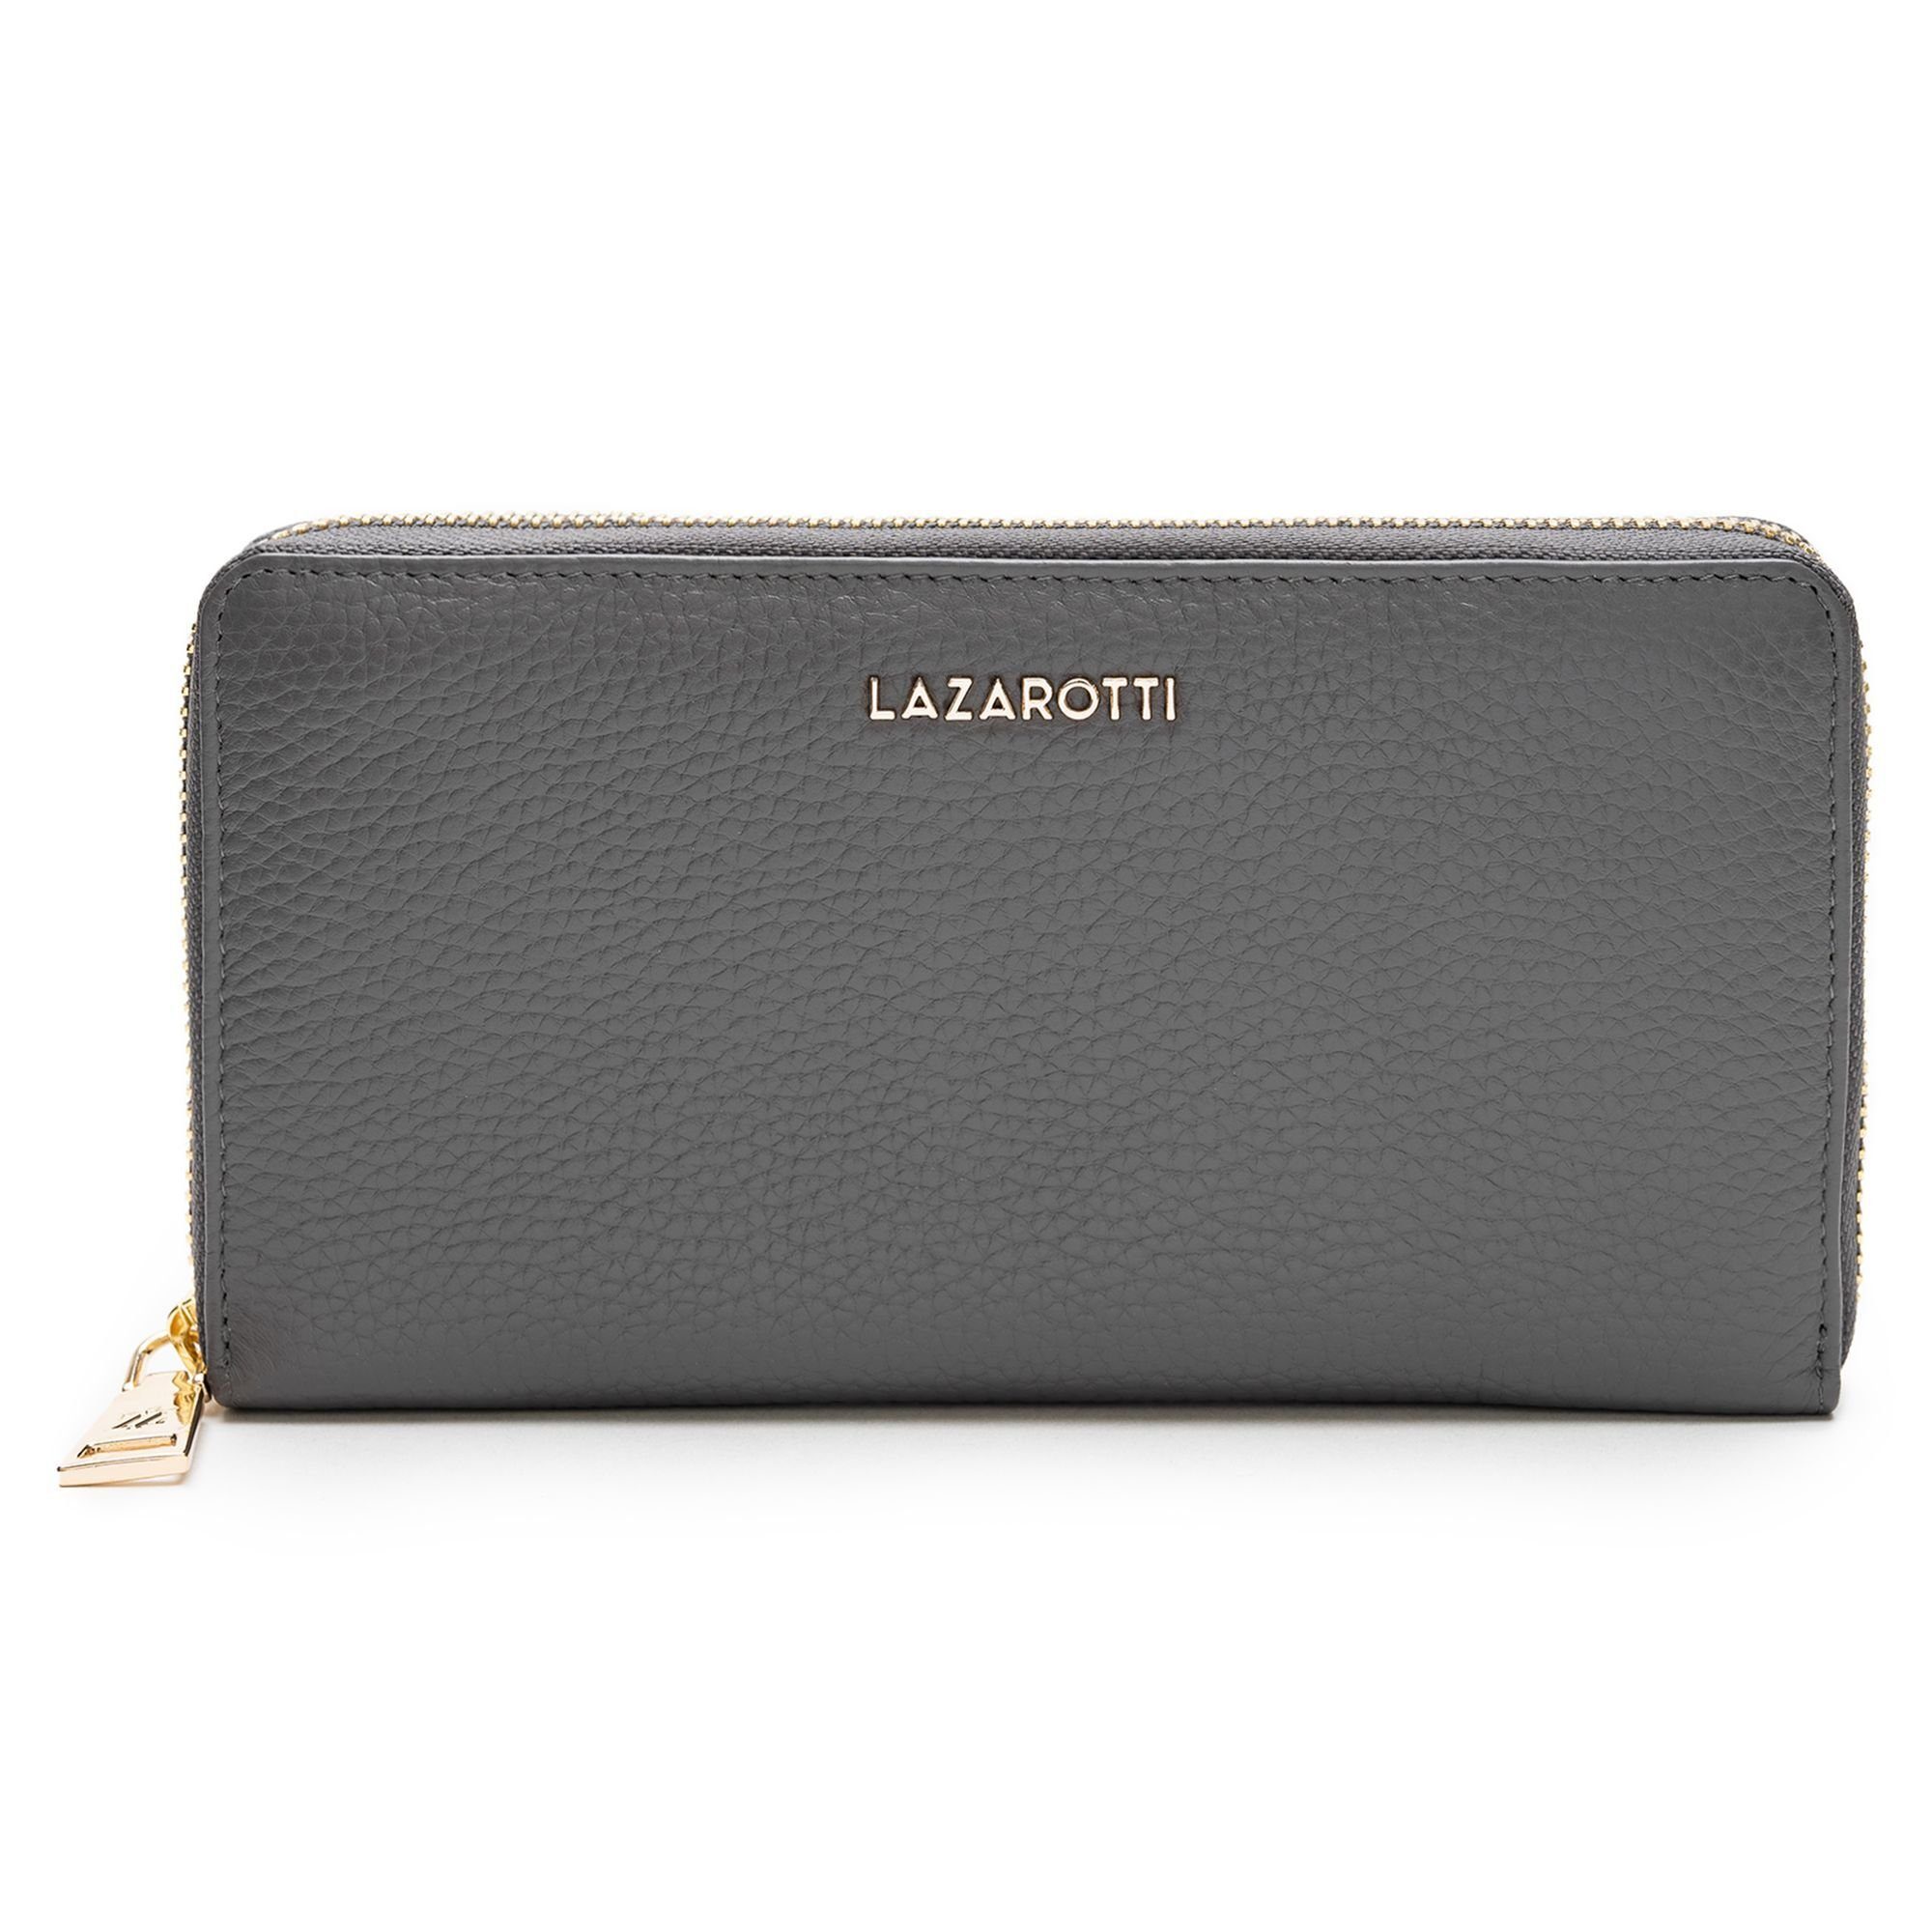 Lazarotti Geldbörse Bologna Leather, grey Leder